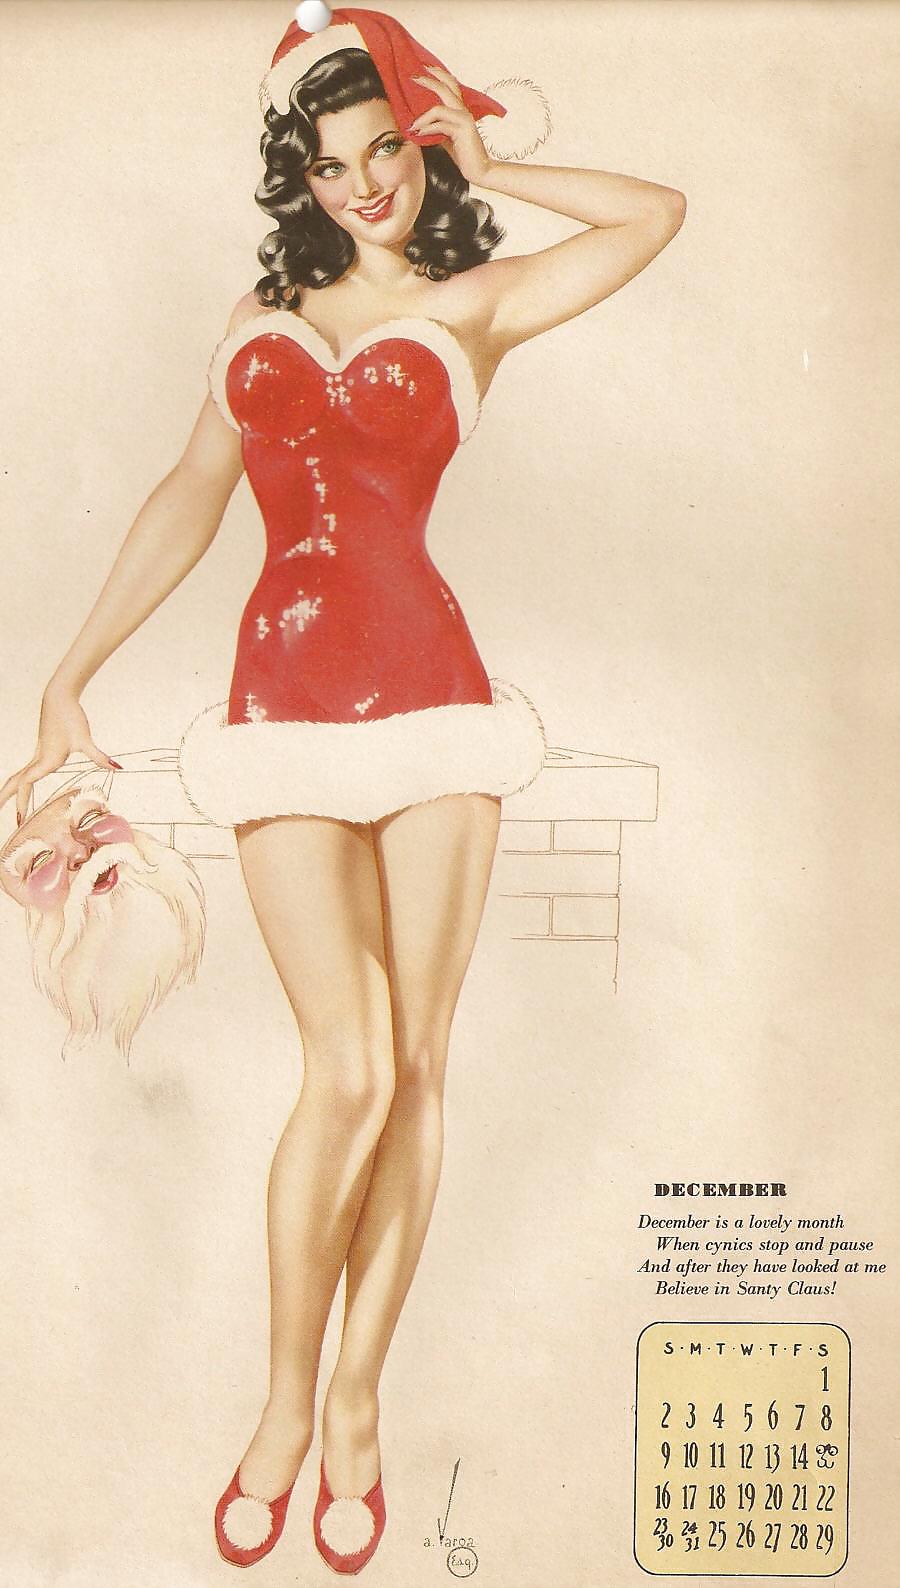 Calendario erotico 5 - vargas pin-up 1945
 #9308018